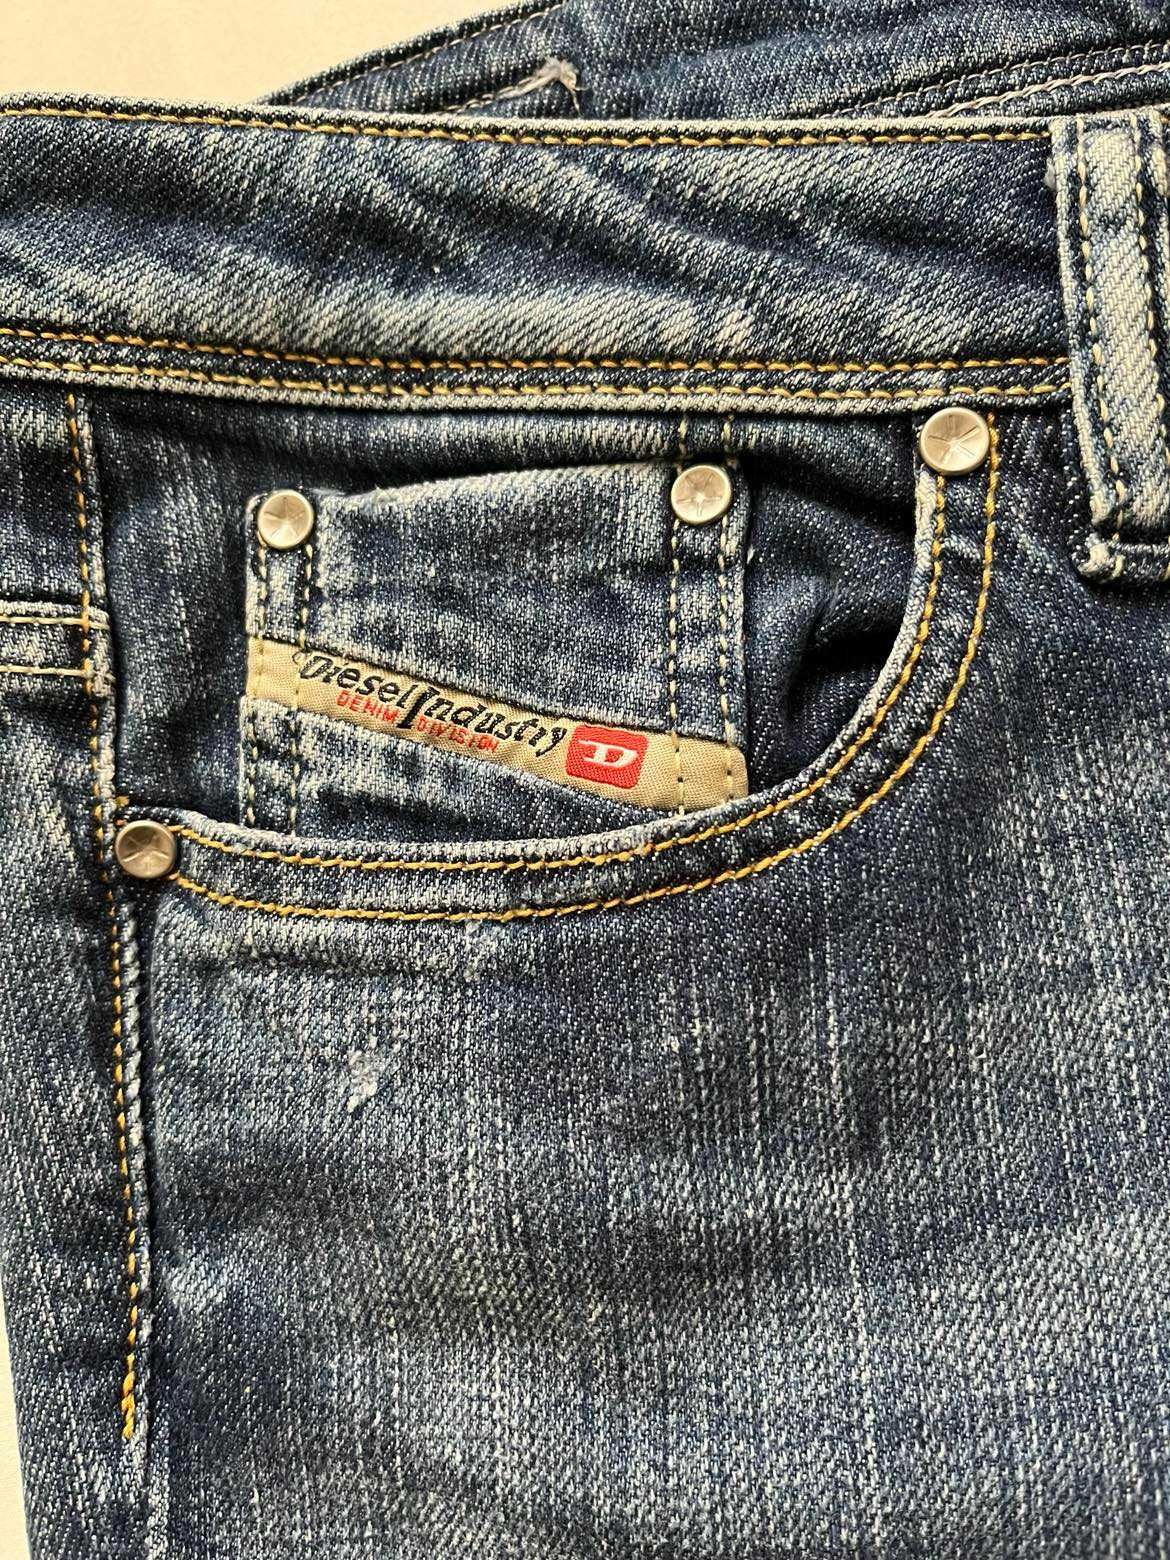 Calça Jeans Diesel